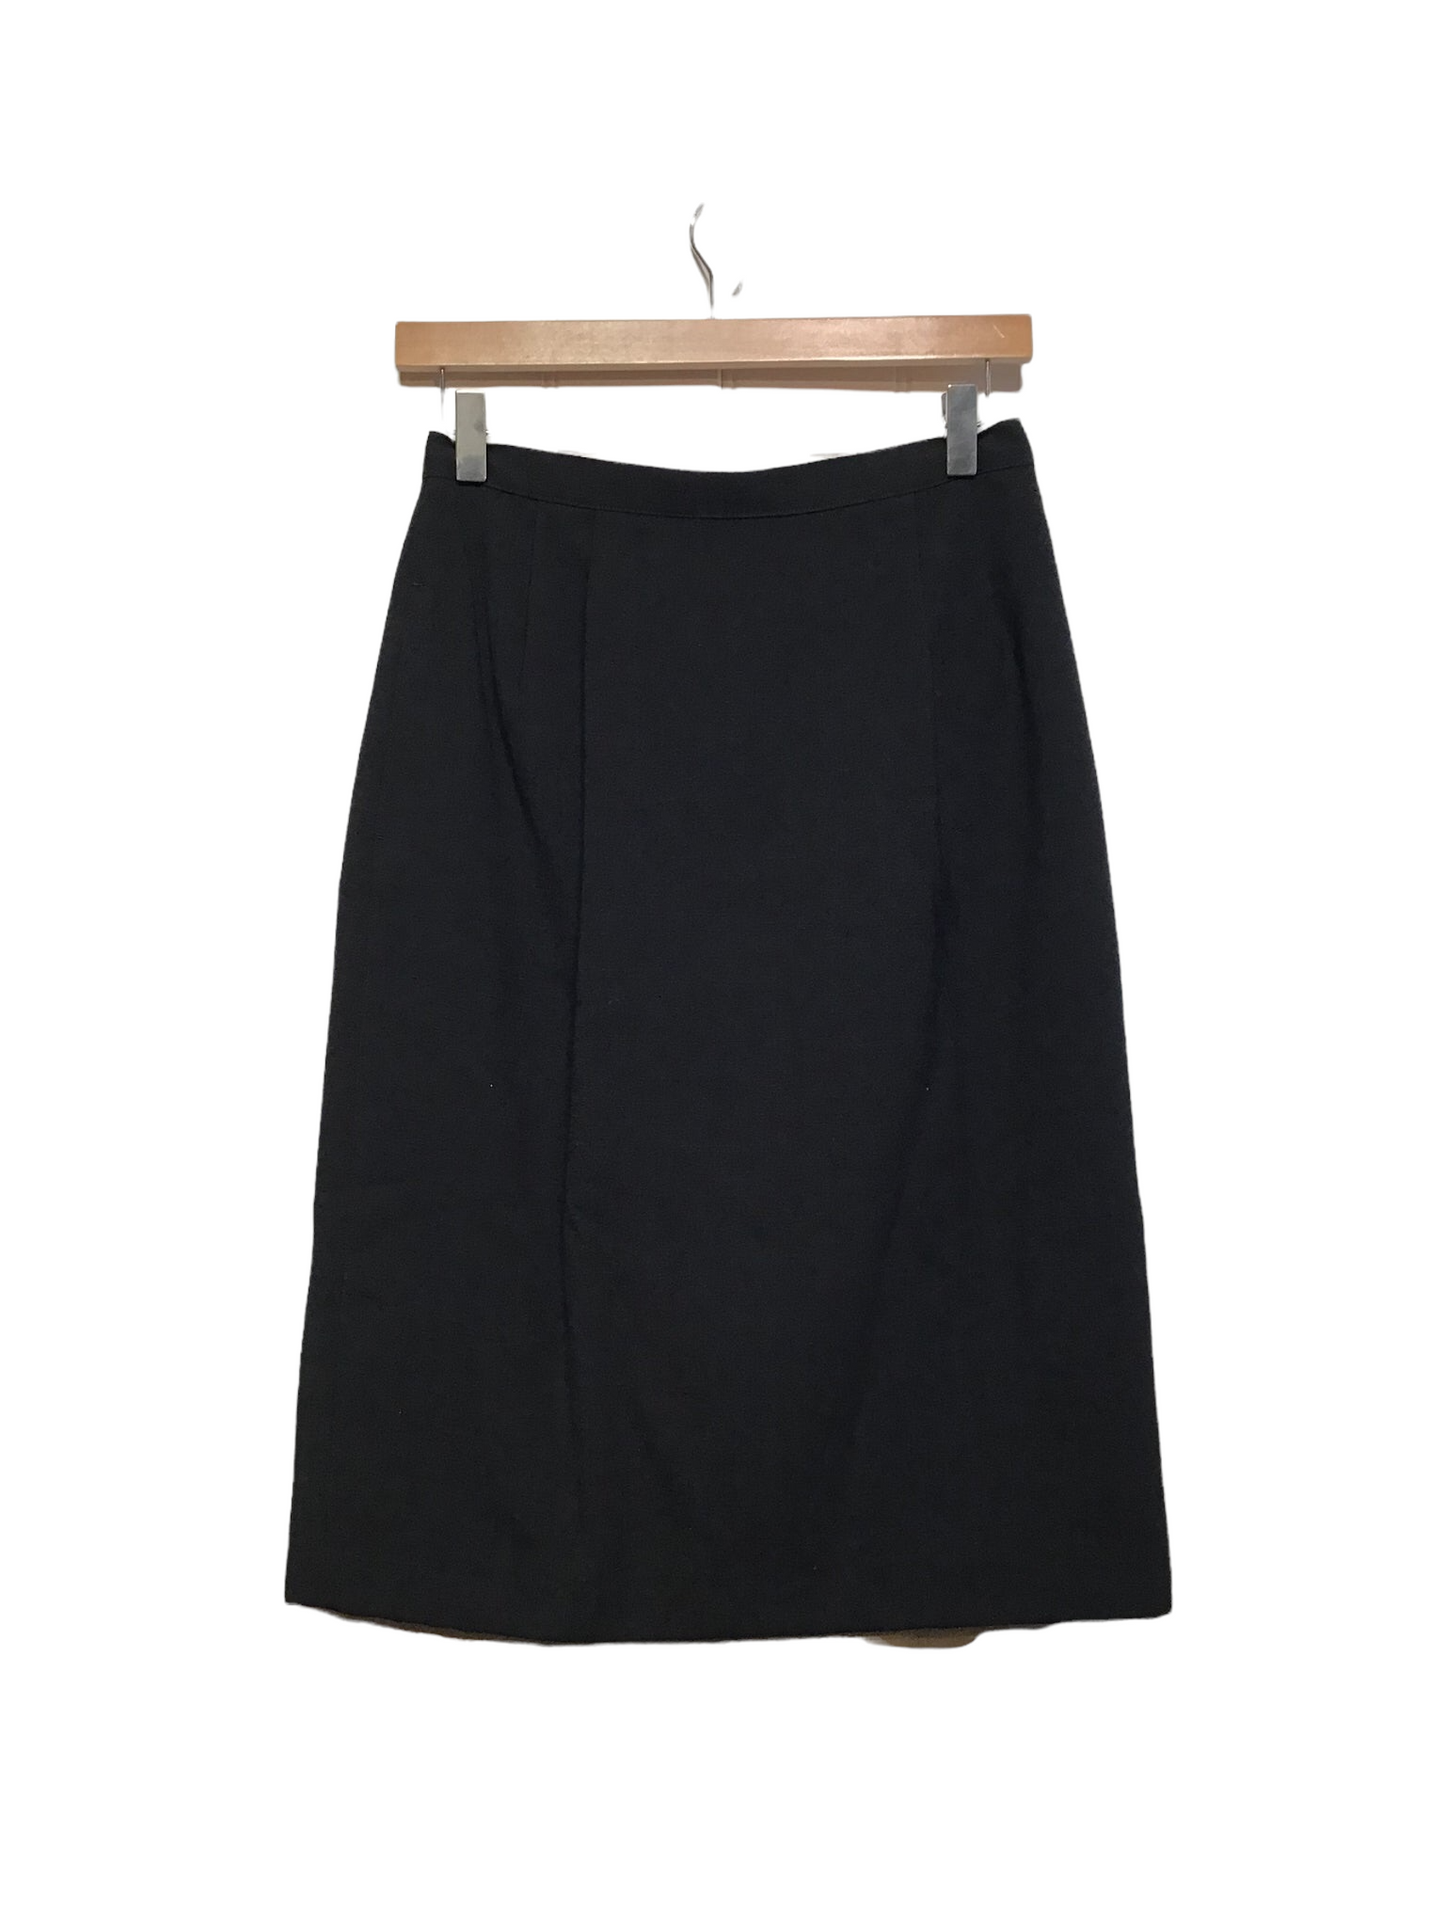 Black Dart Midi Skirt (Size M)